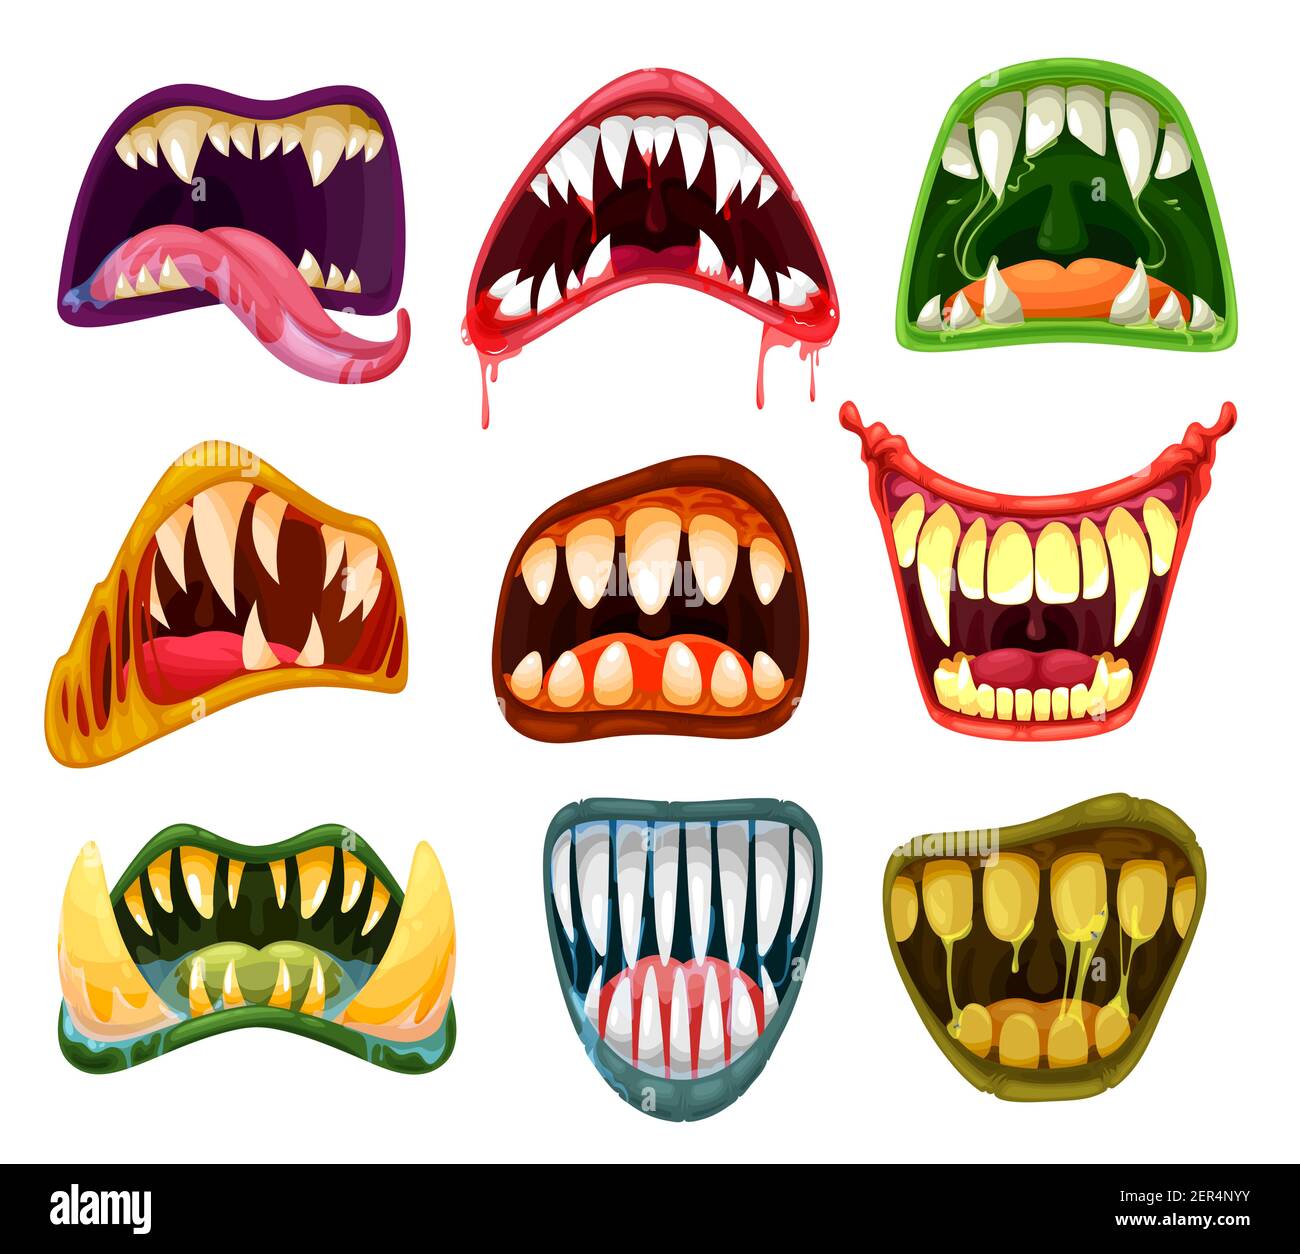 scary cartoon monster teeth